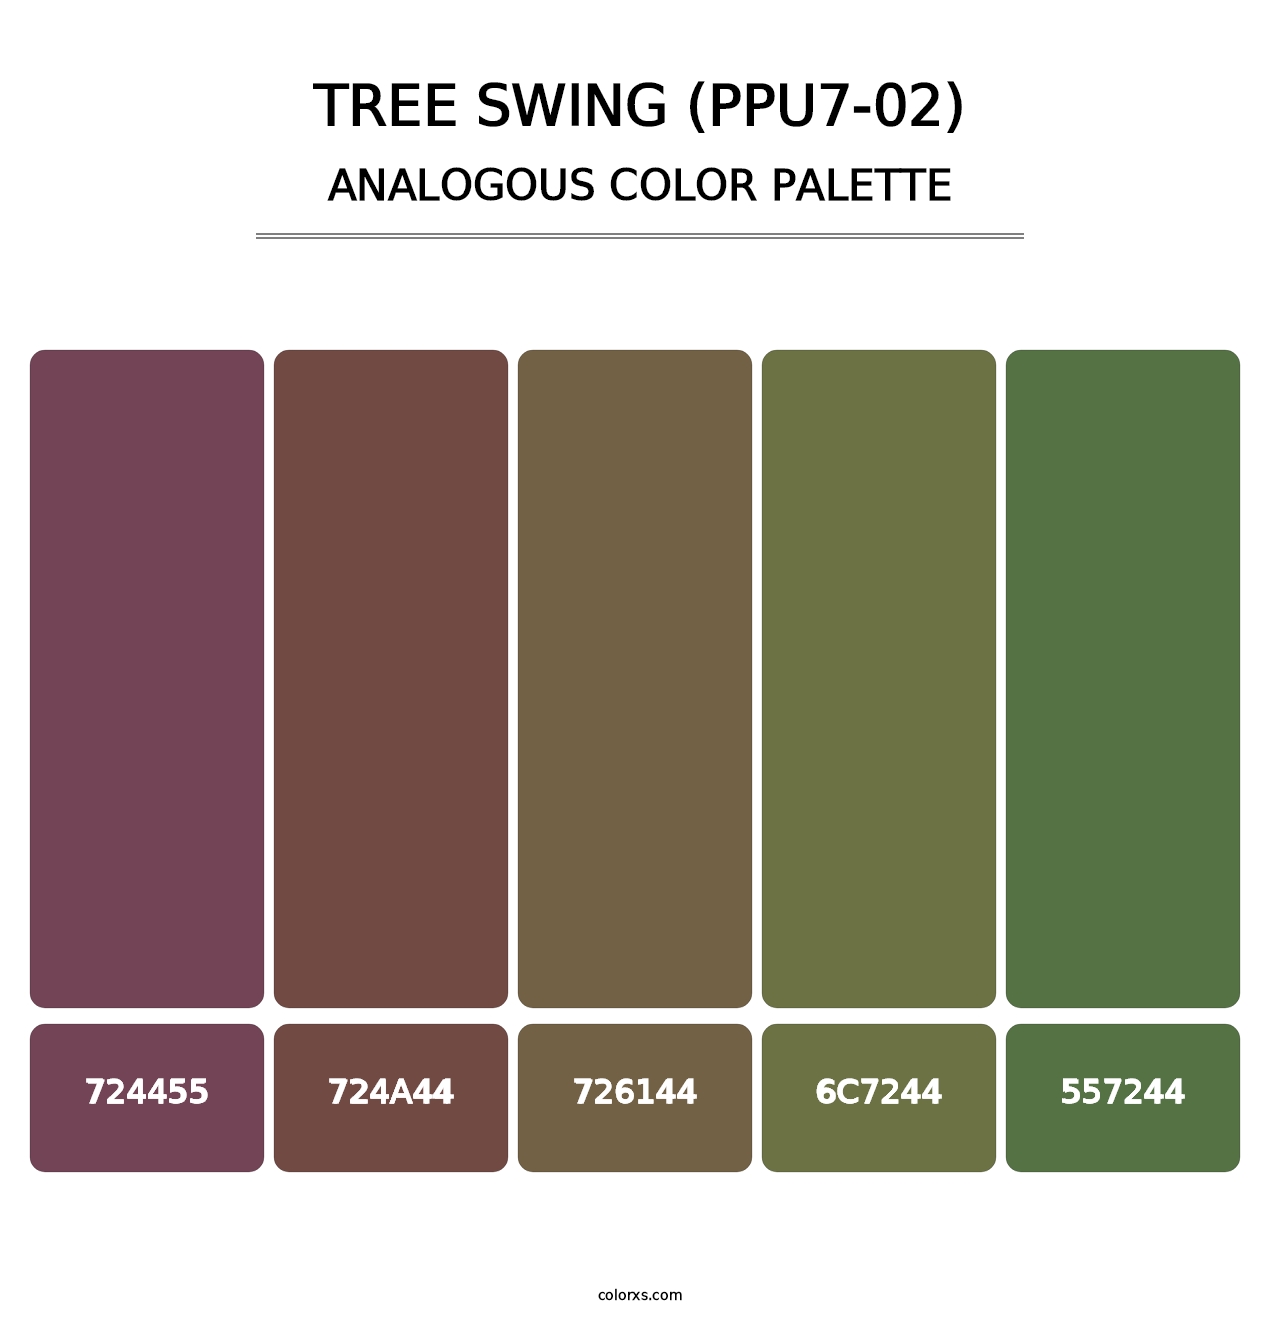 Tree Swing (PPU7-02) - Analogous Color Palette